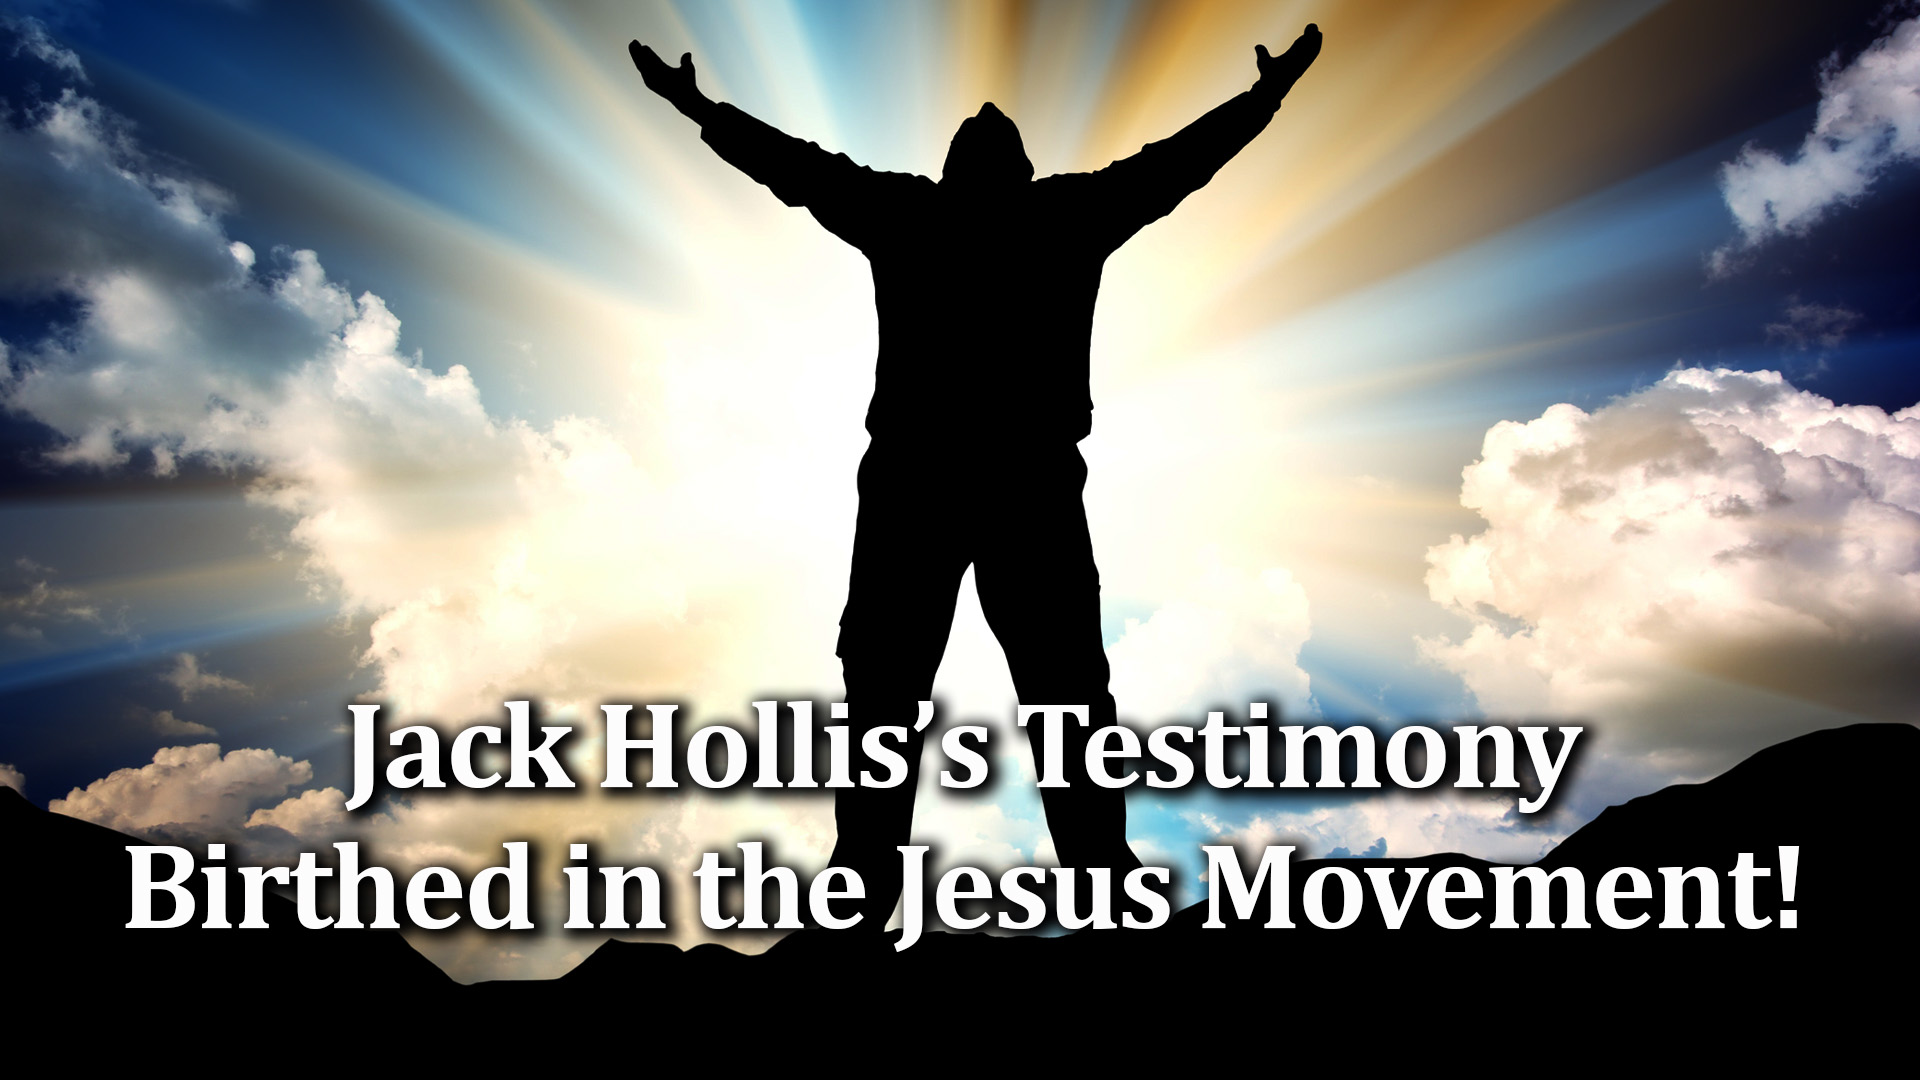 11-16-21 Jack Hollis Testimony Birthed in the Jesus Movement